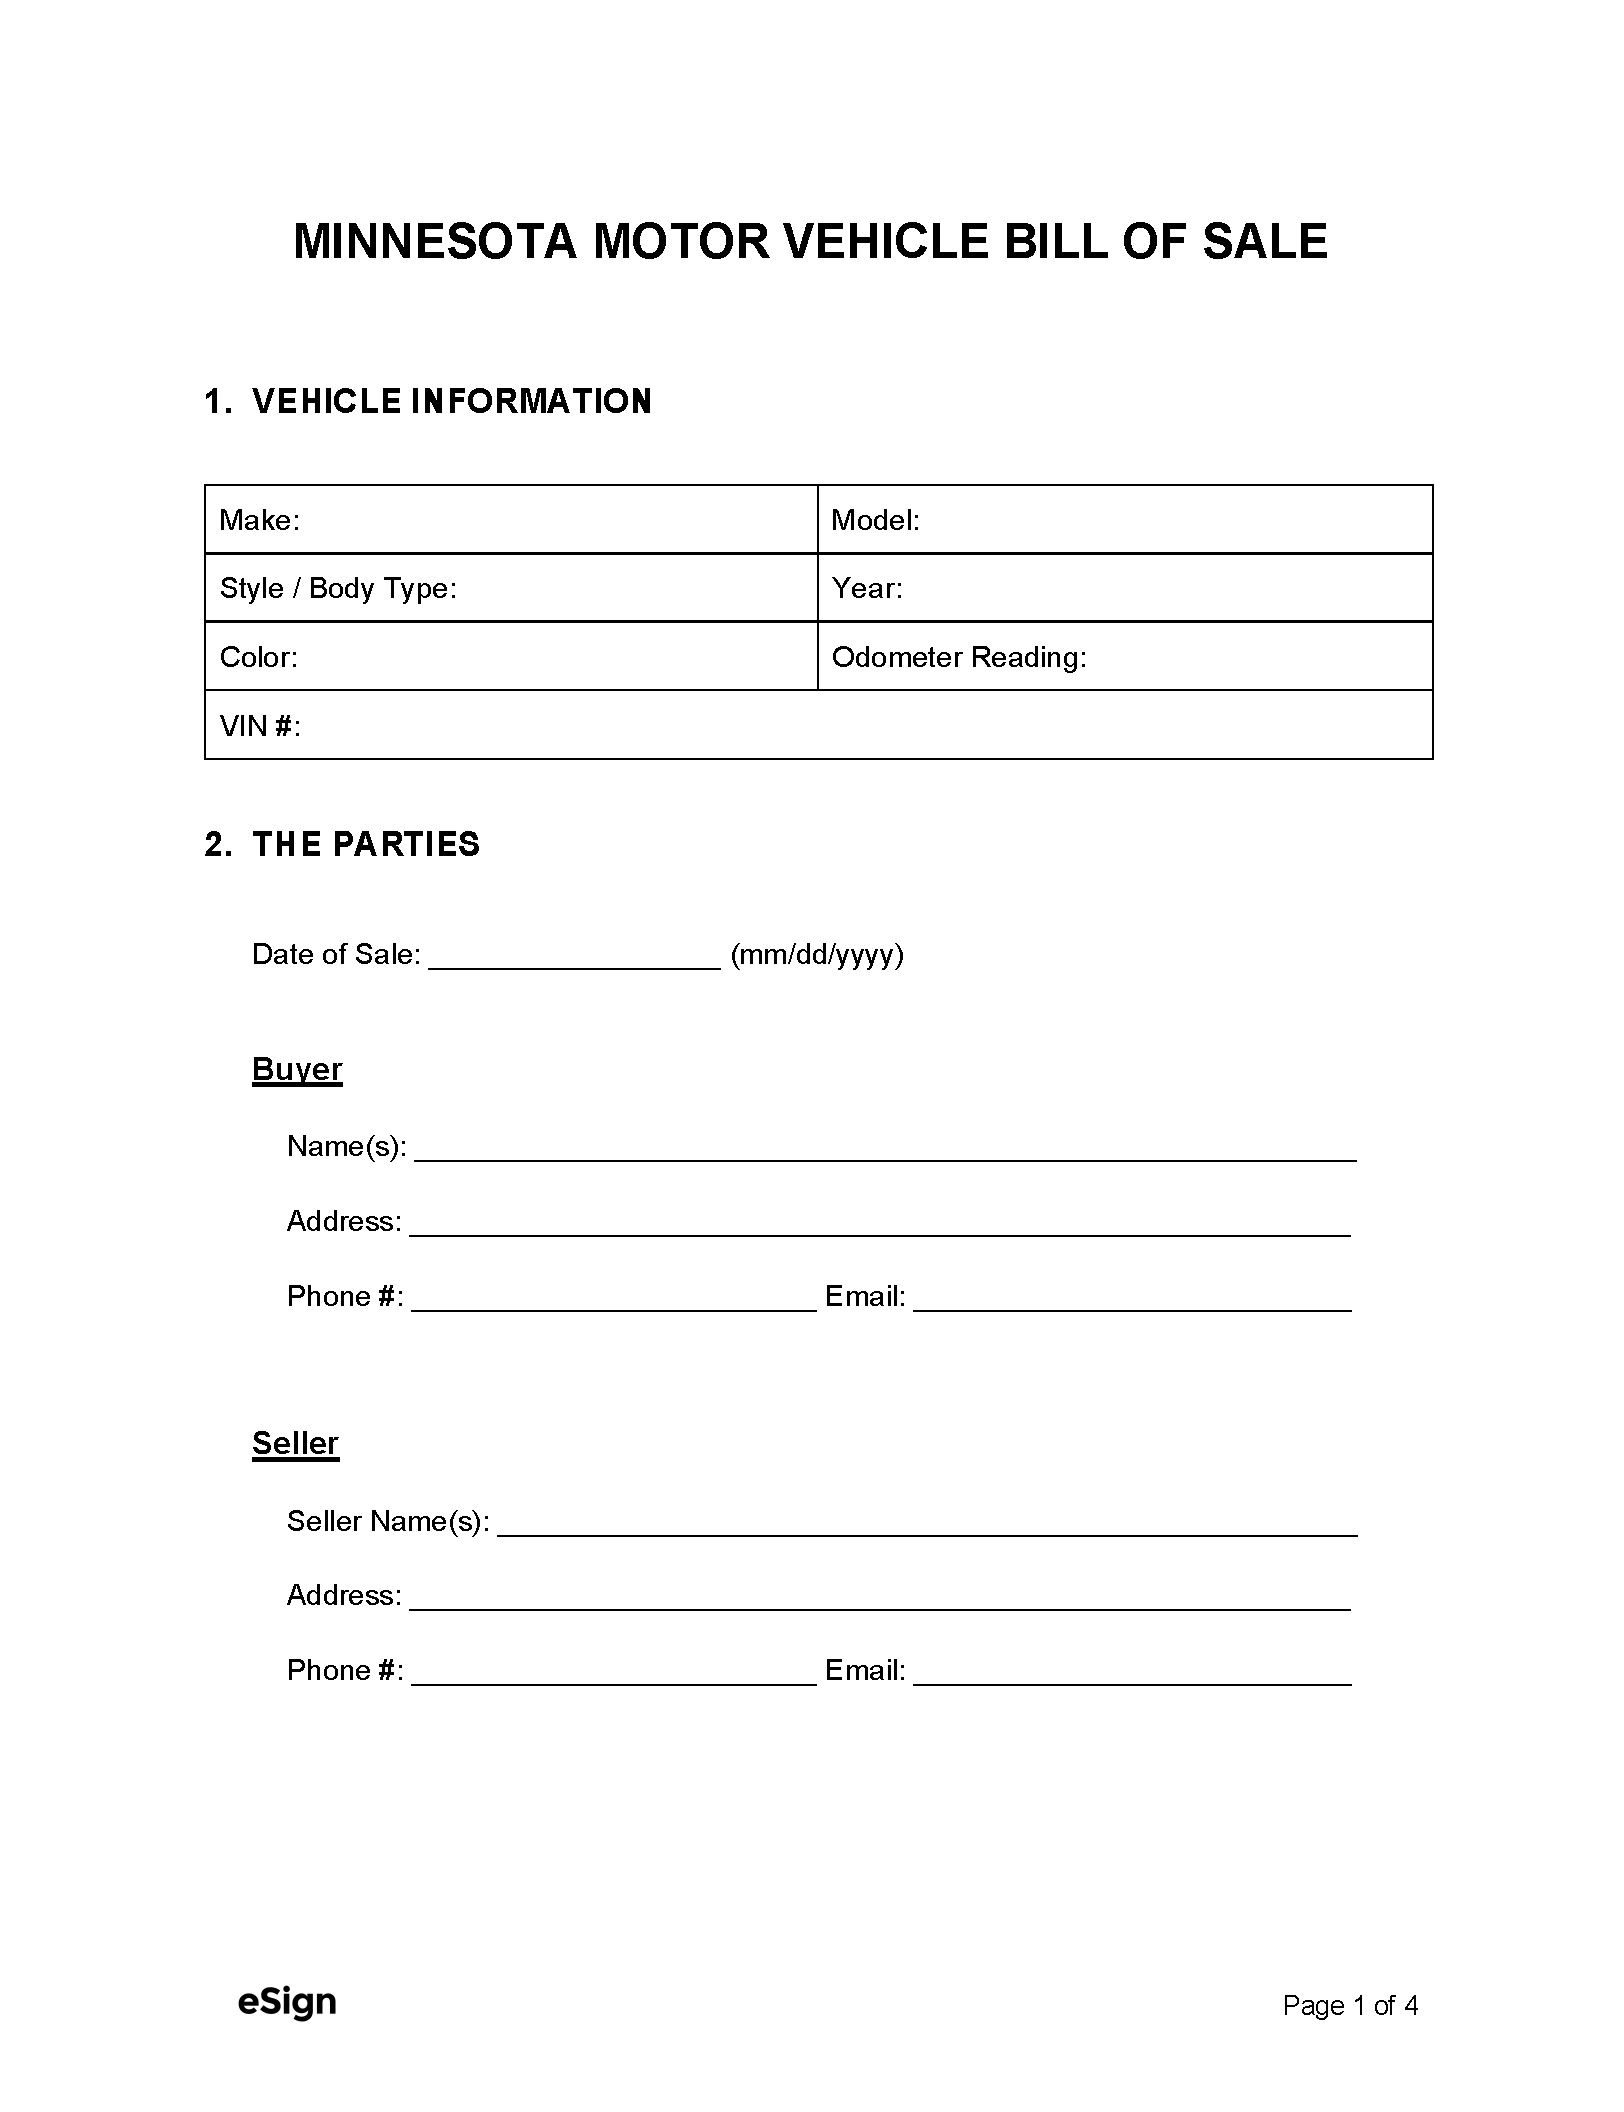 Free Minnesota Motor Vehicle Bill of Sale Form - PDF | Word